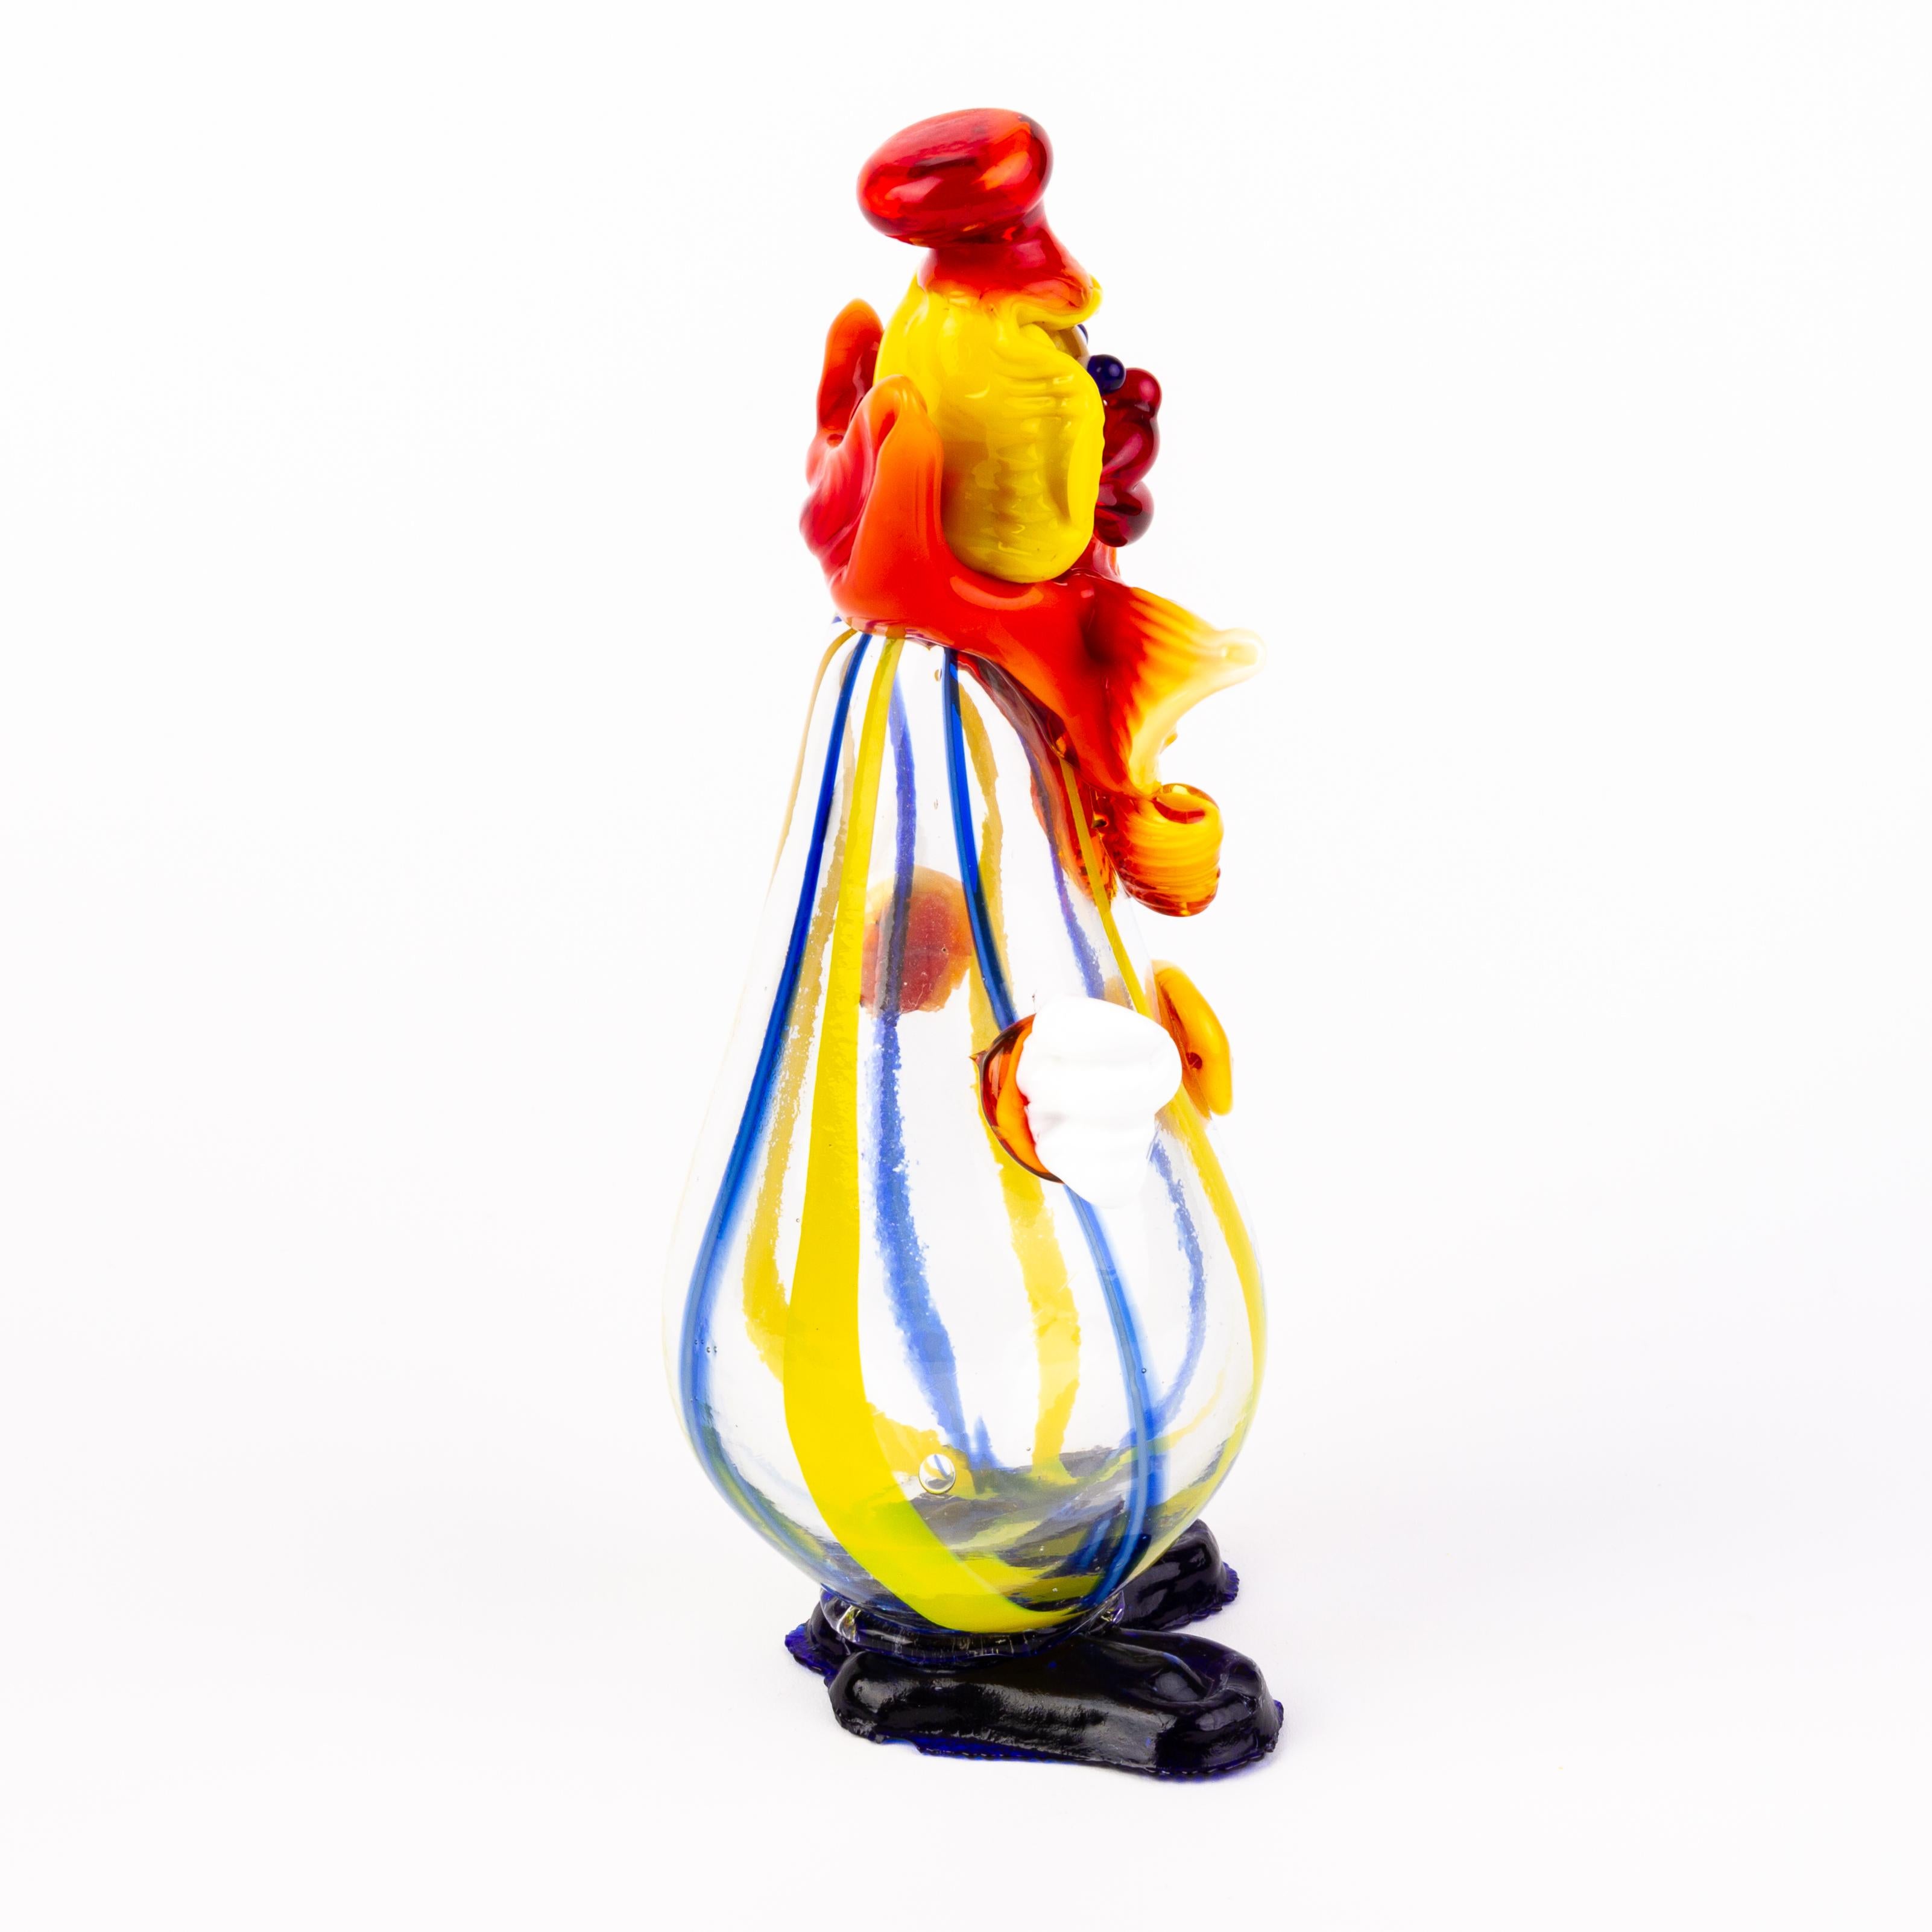 Murano Venetian Glass Sculpture Designer Clown
Good condition
Free international shipping.